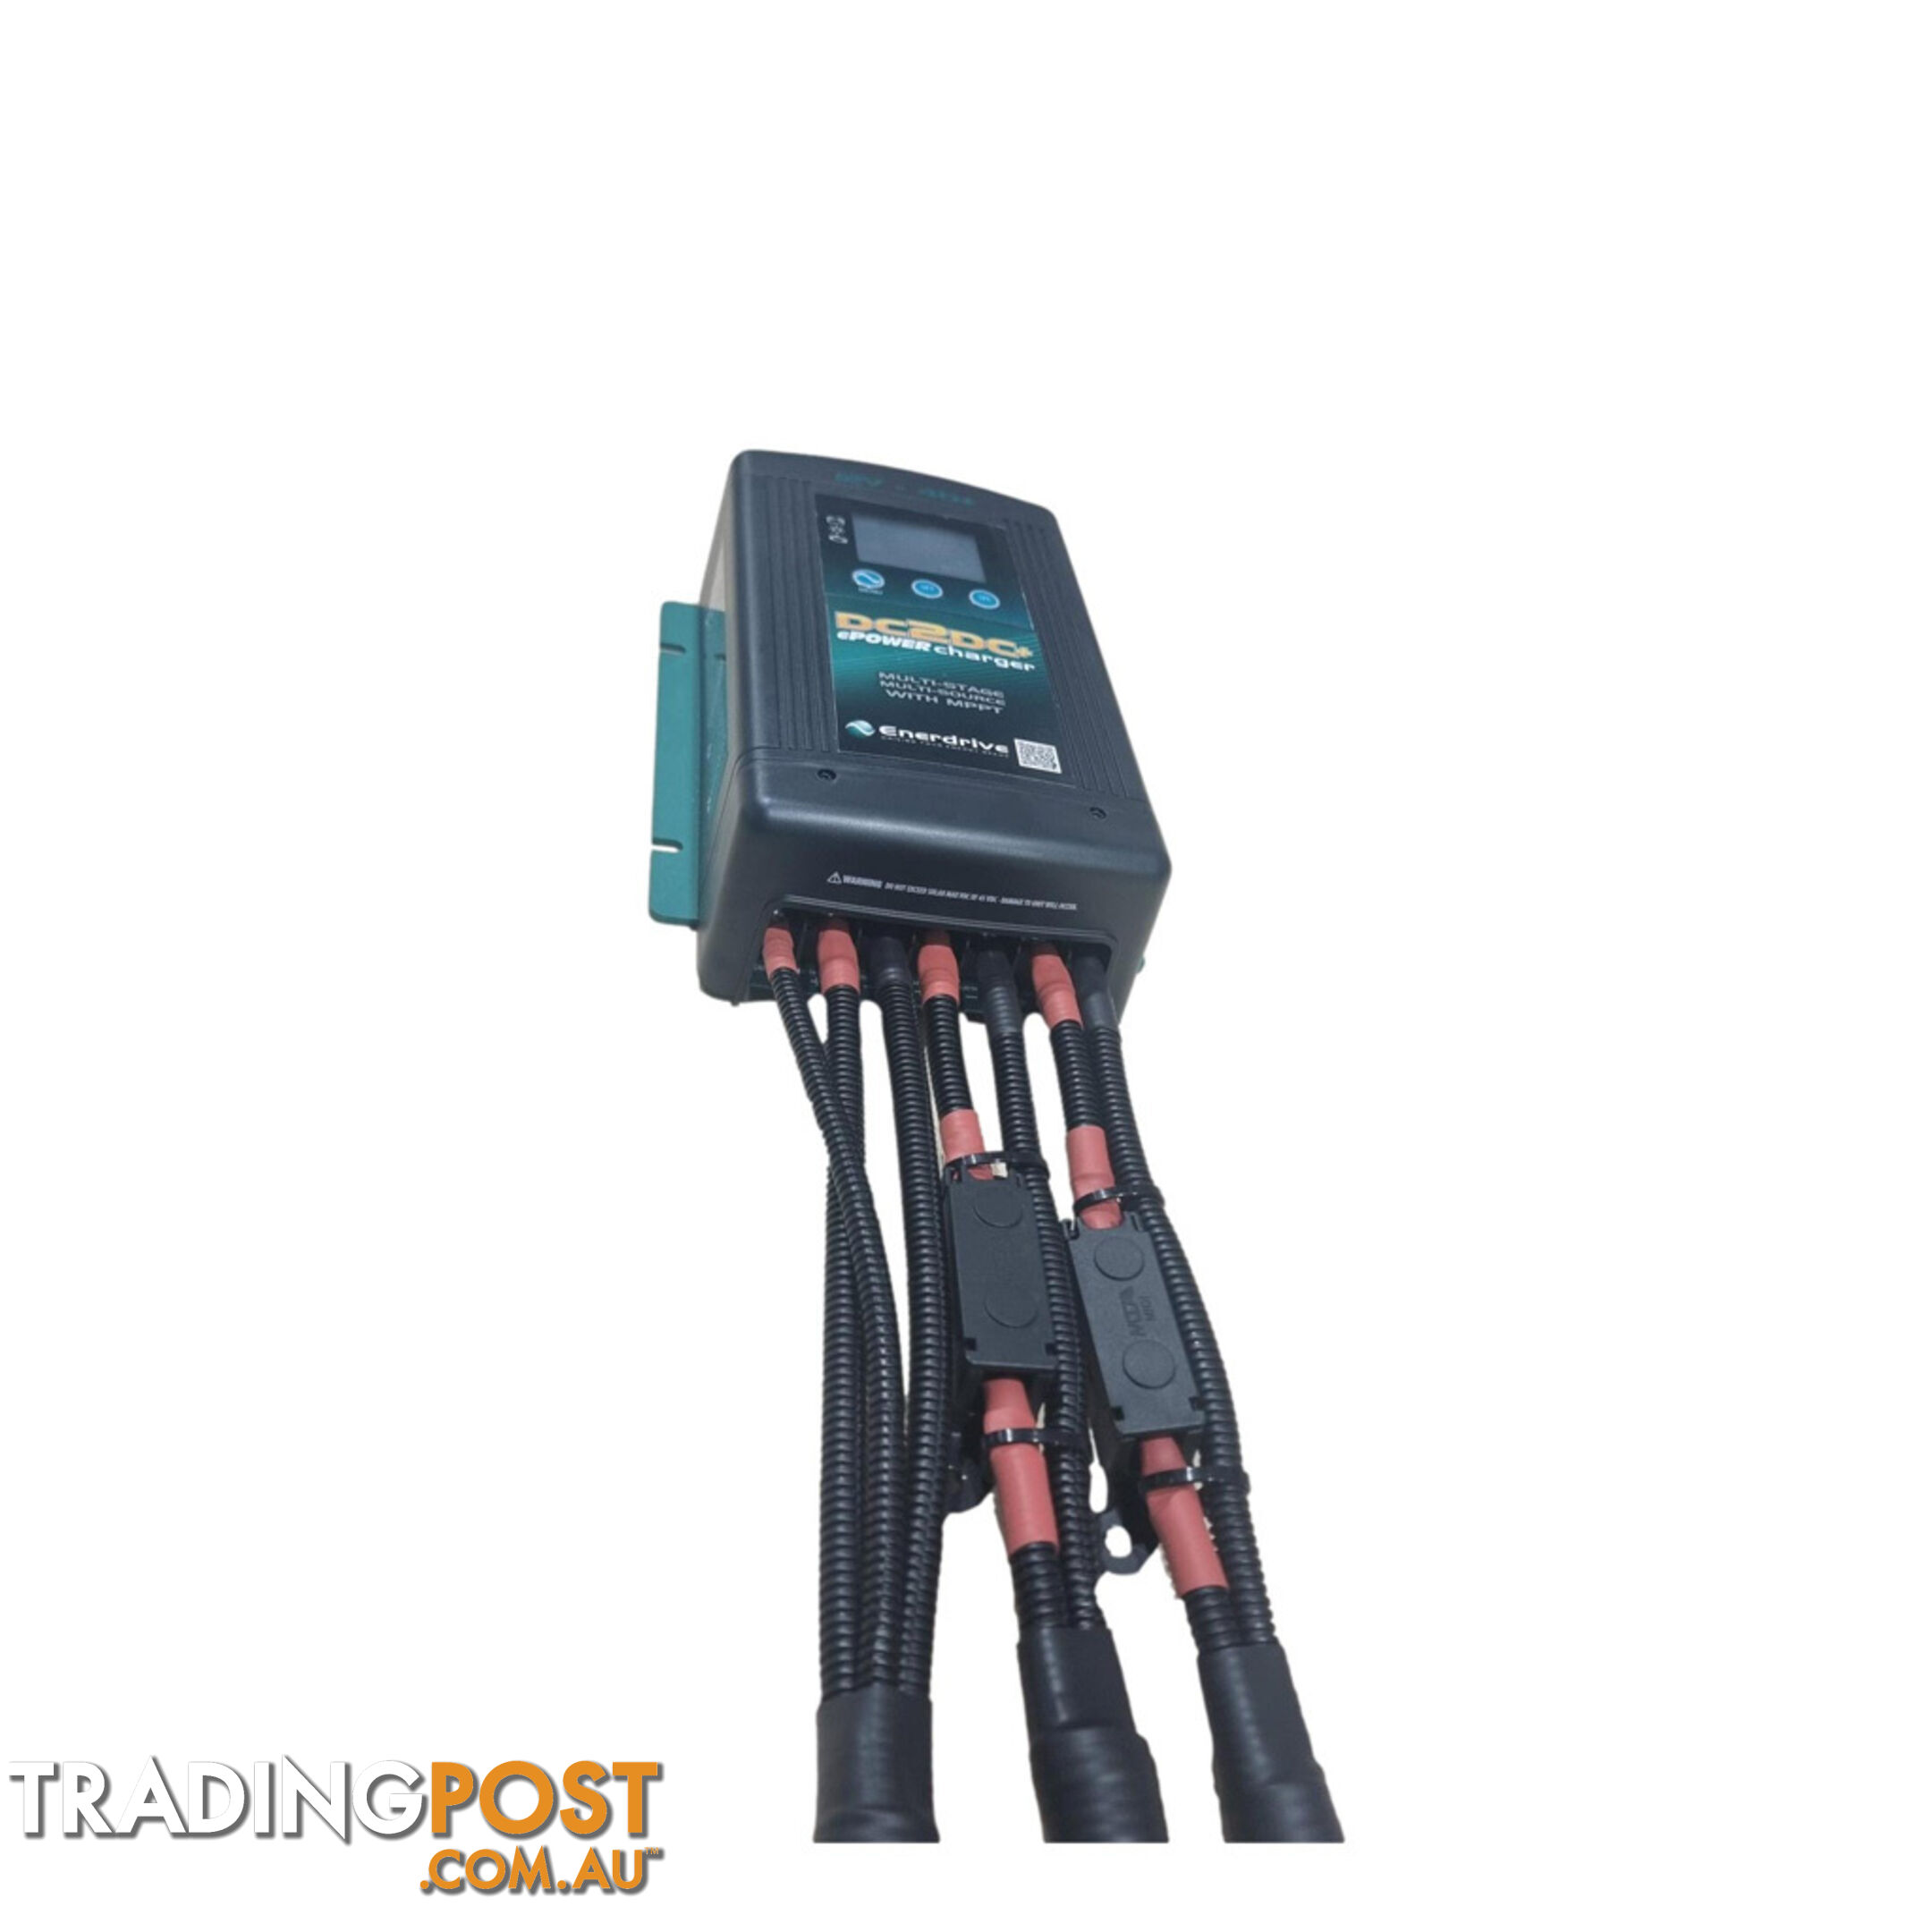 Enerdrive DC to DC Wiring Adaptor Inc Ignition Sensor Wire SKU - DC-12149